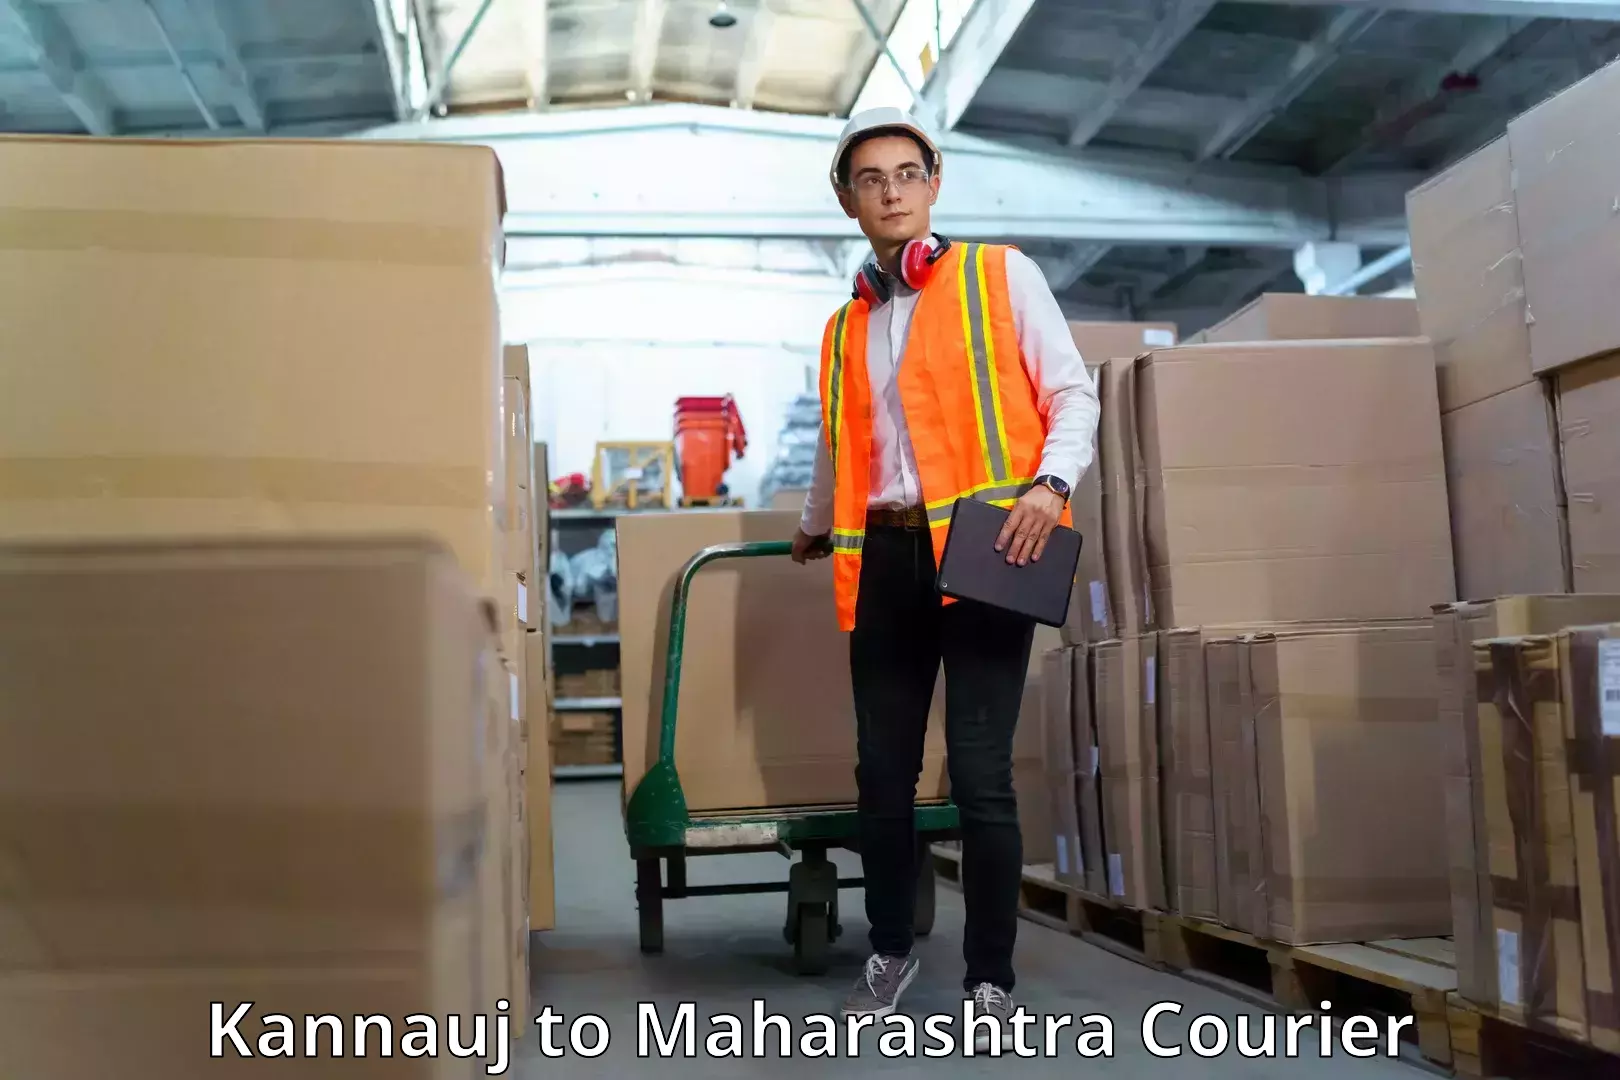 Courier service comparison Kannauj to Newasa